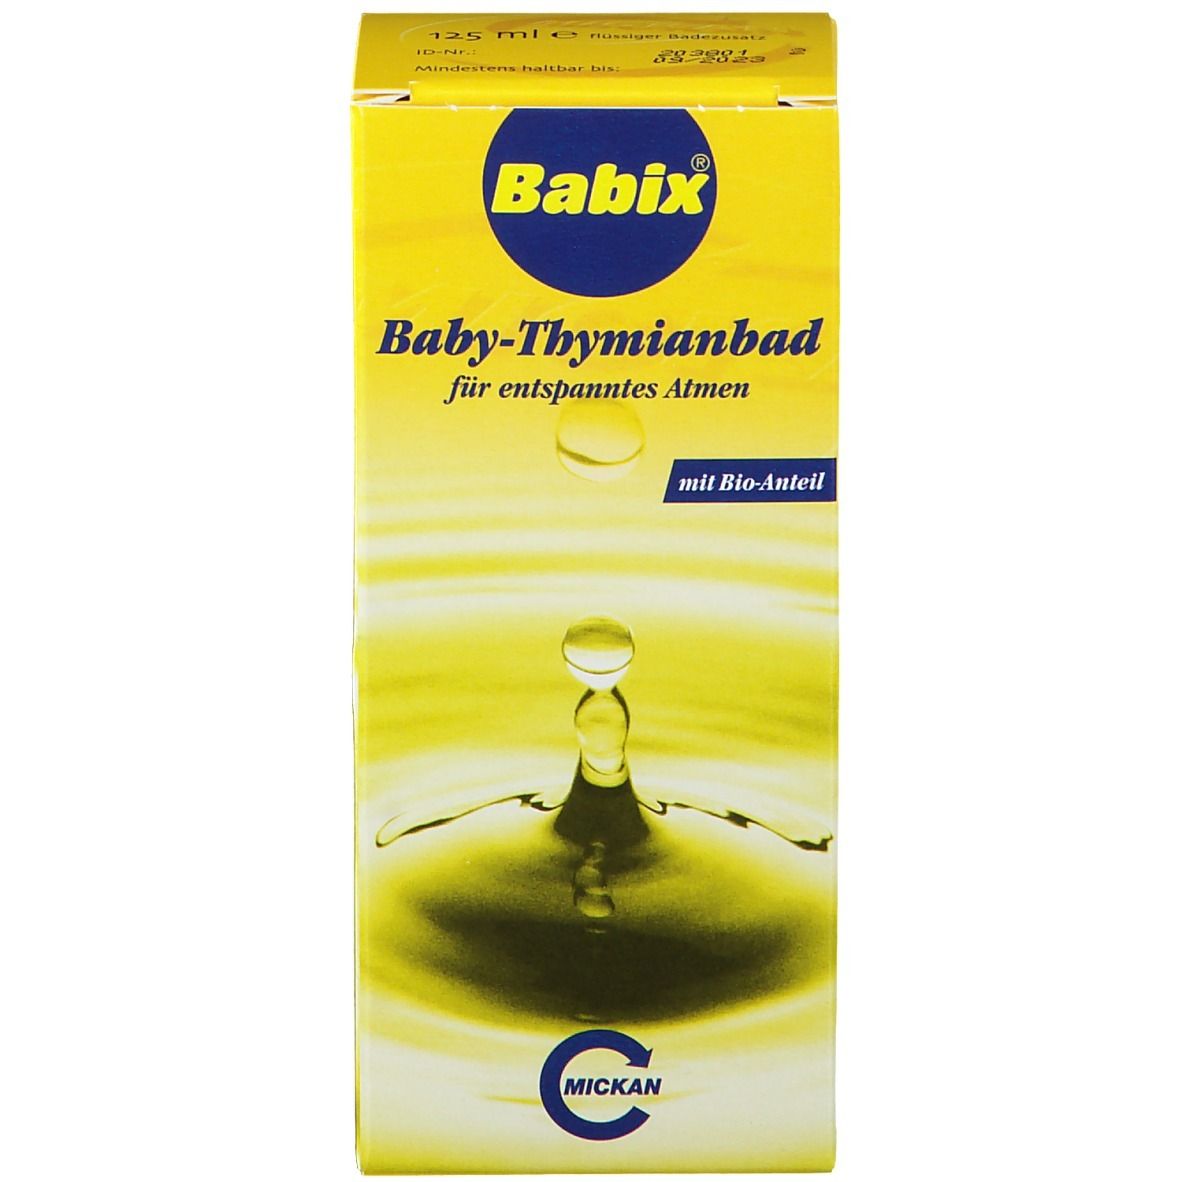 Babix® Baby-Thymianbad